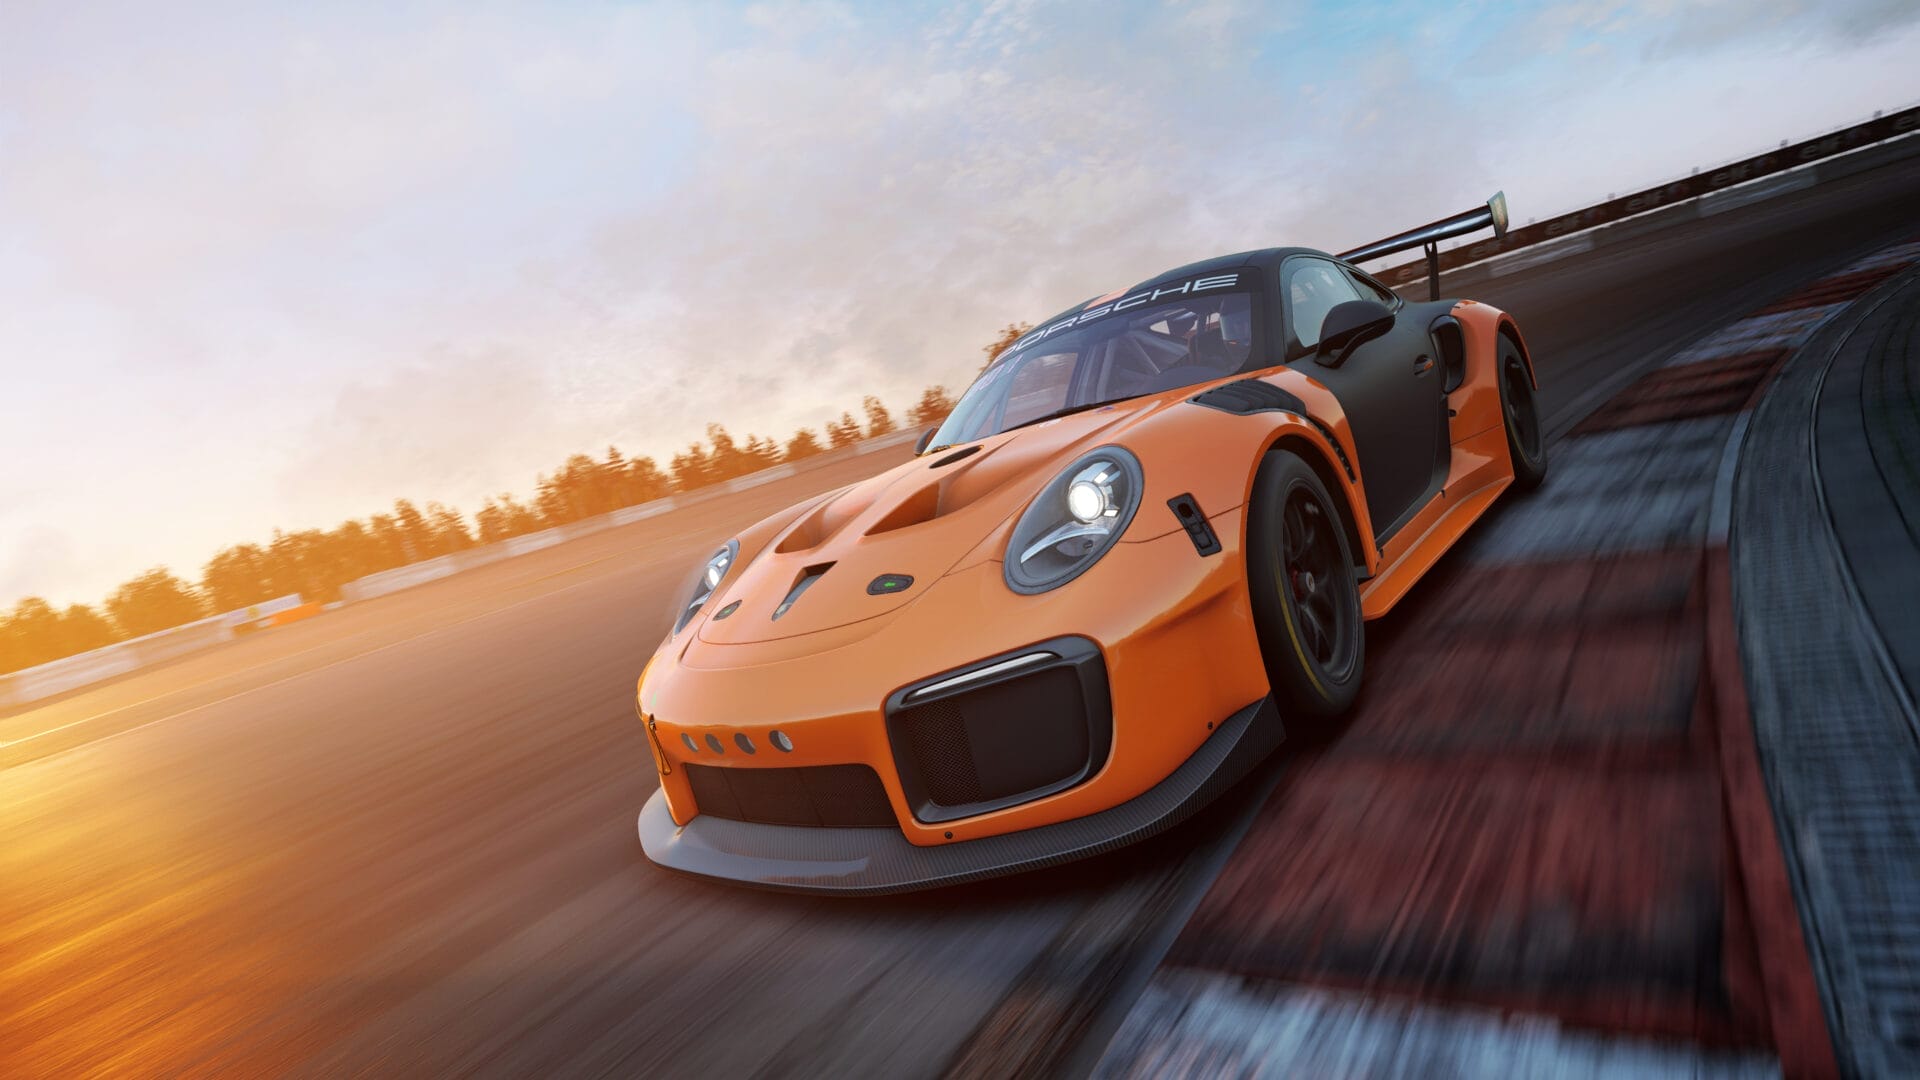 Cruise the virtual tracks in style with the striking Orange Porsche 911 GT2 in Assetto Corsa Competizione